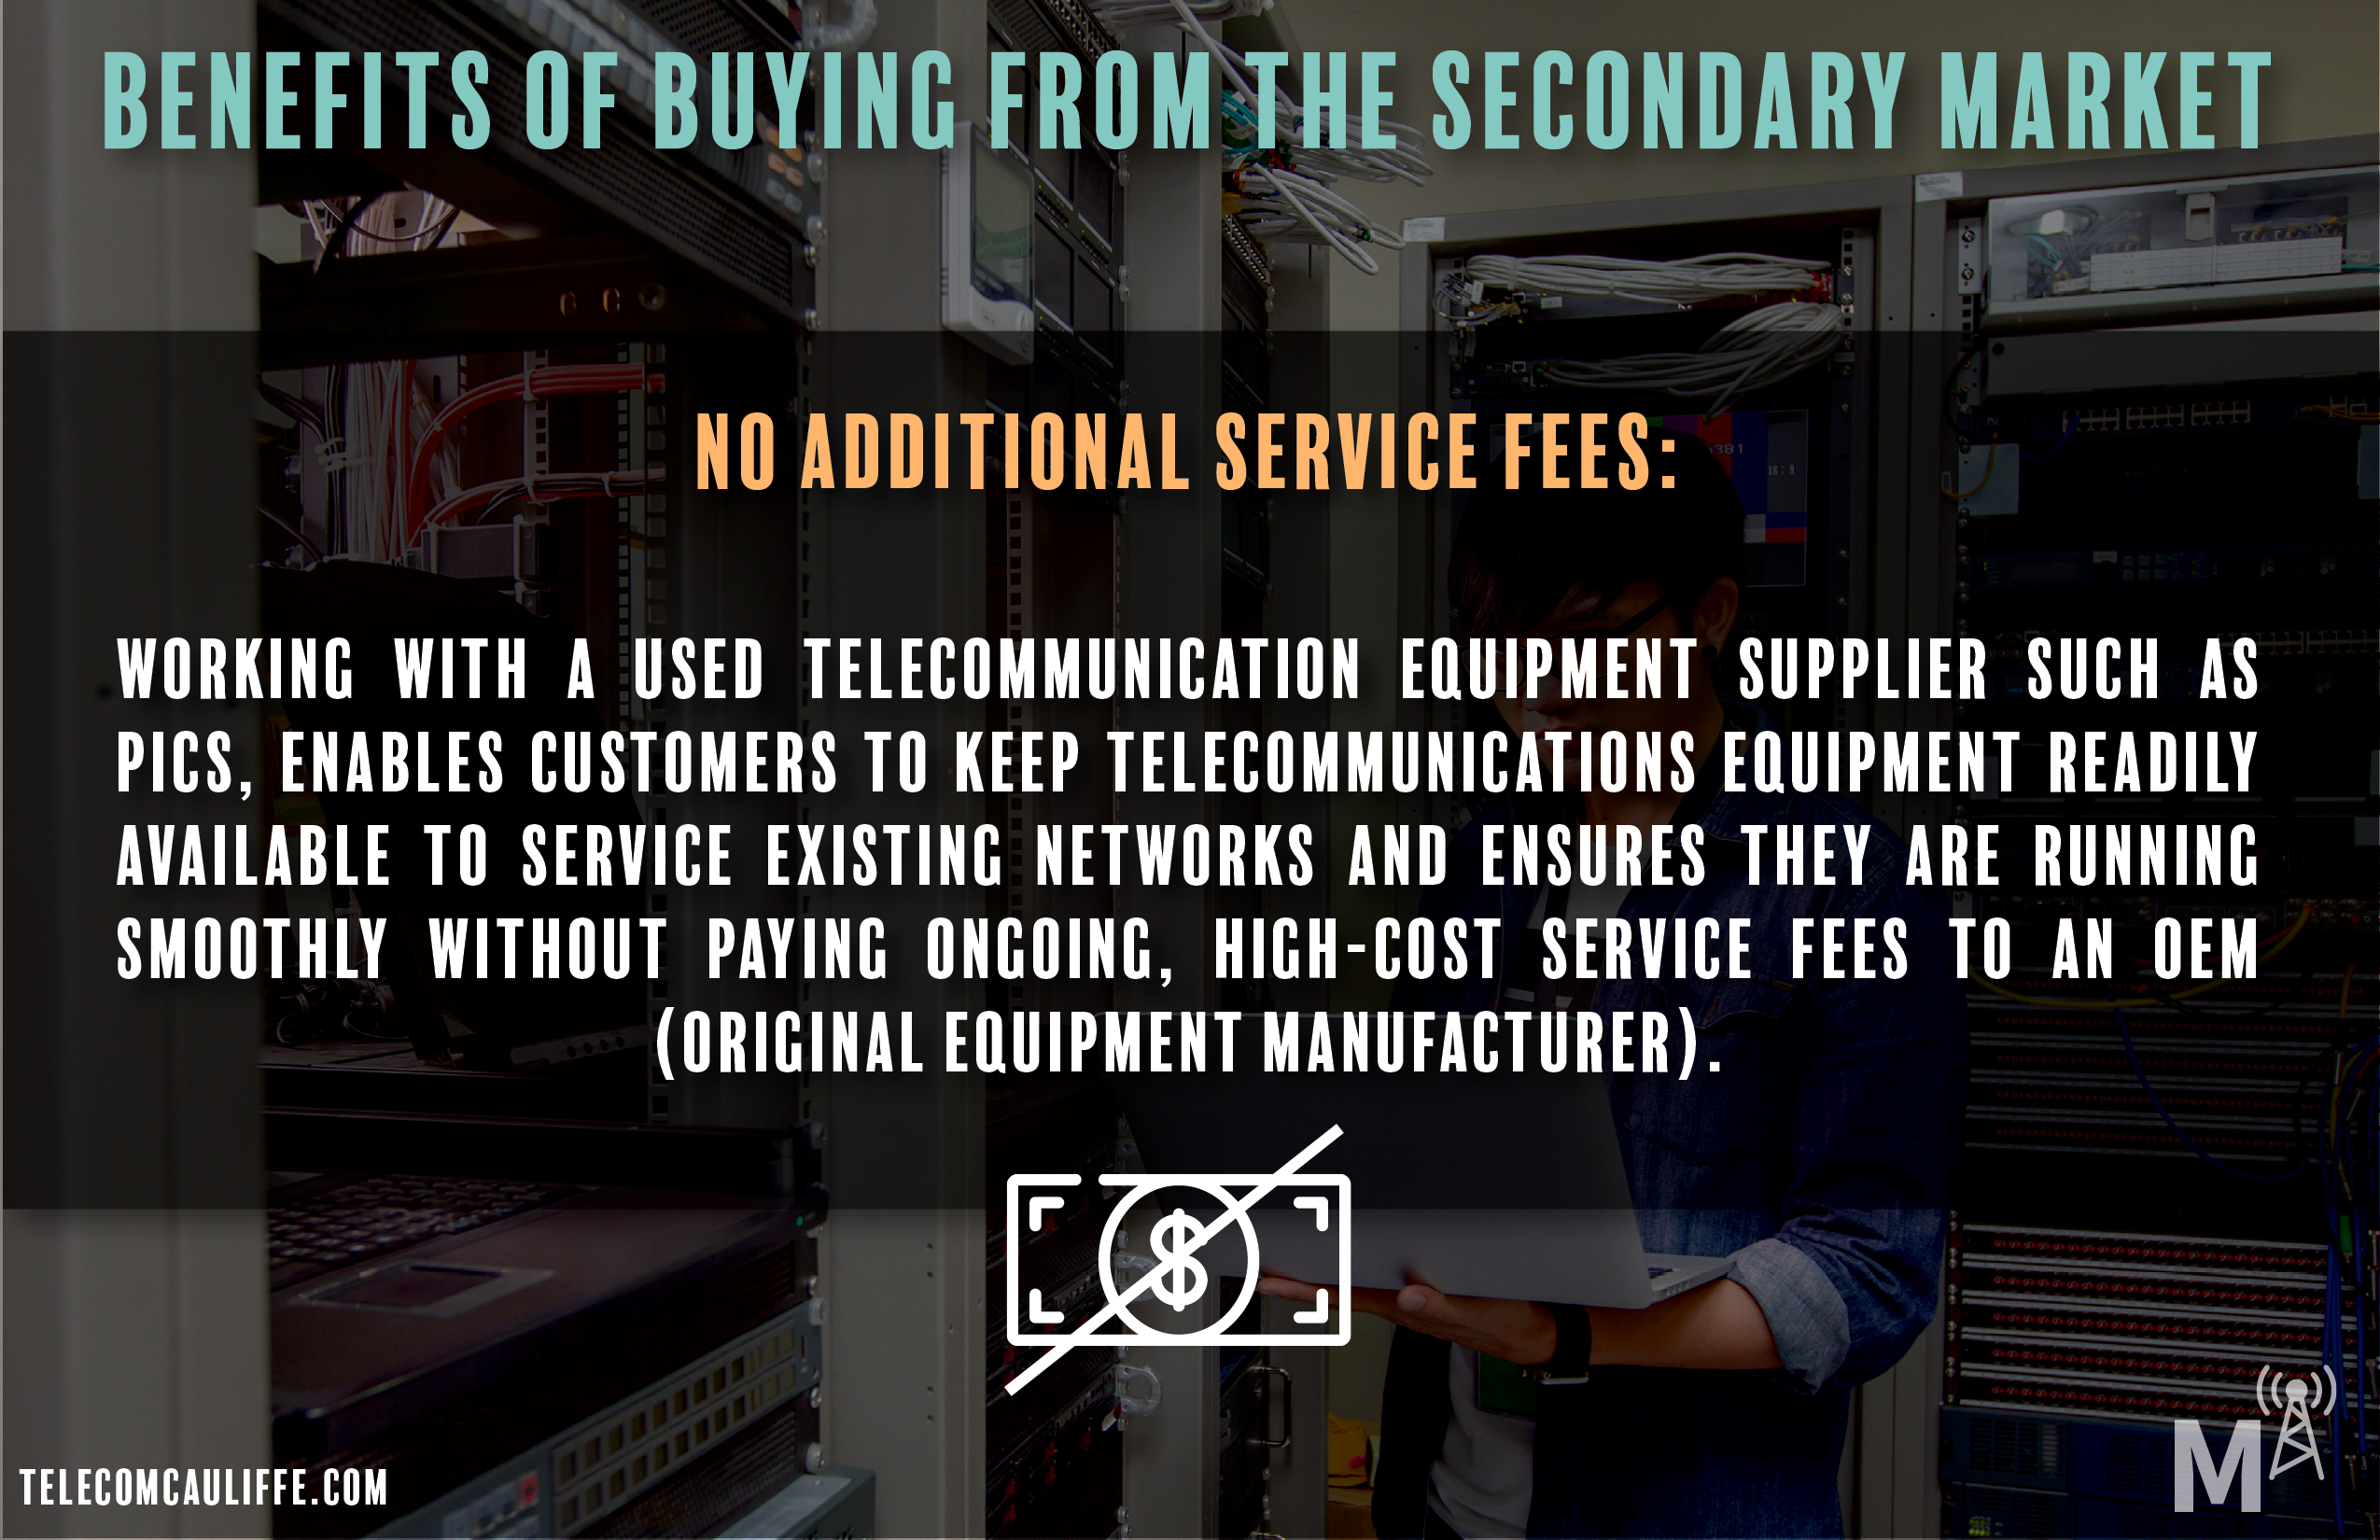 TELECOMCAULIFFE - PICS Telecom_Benefits of Buying Reused Telecommunications Equipment-5